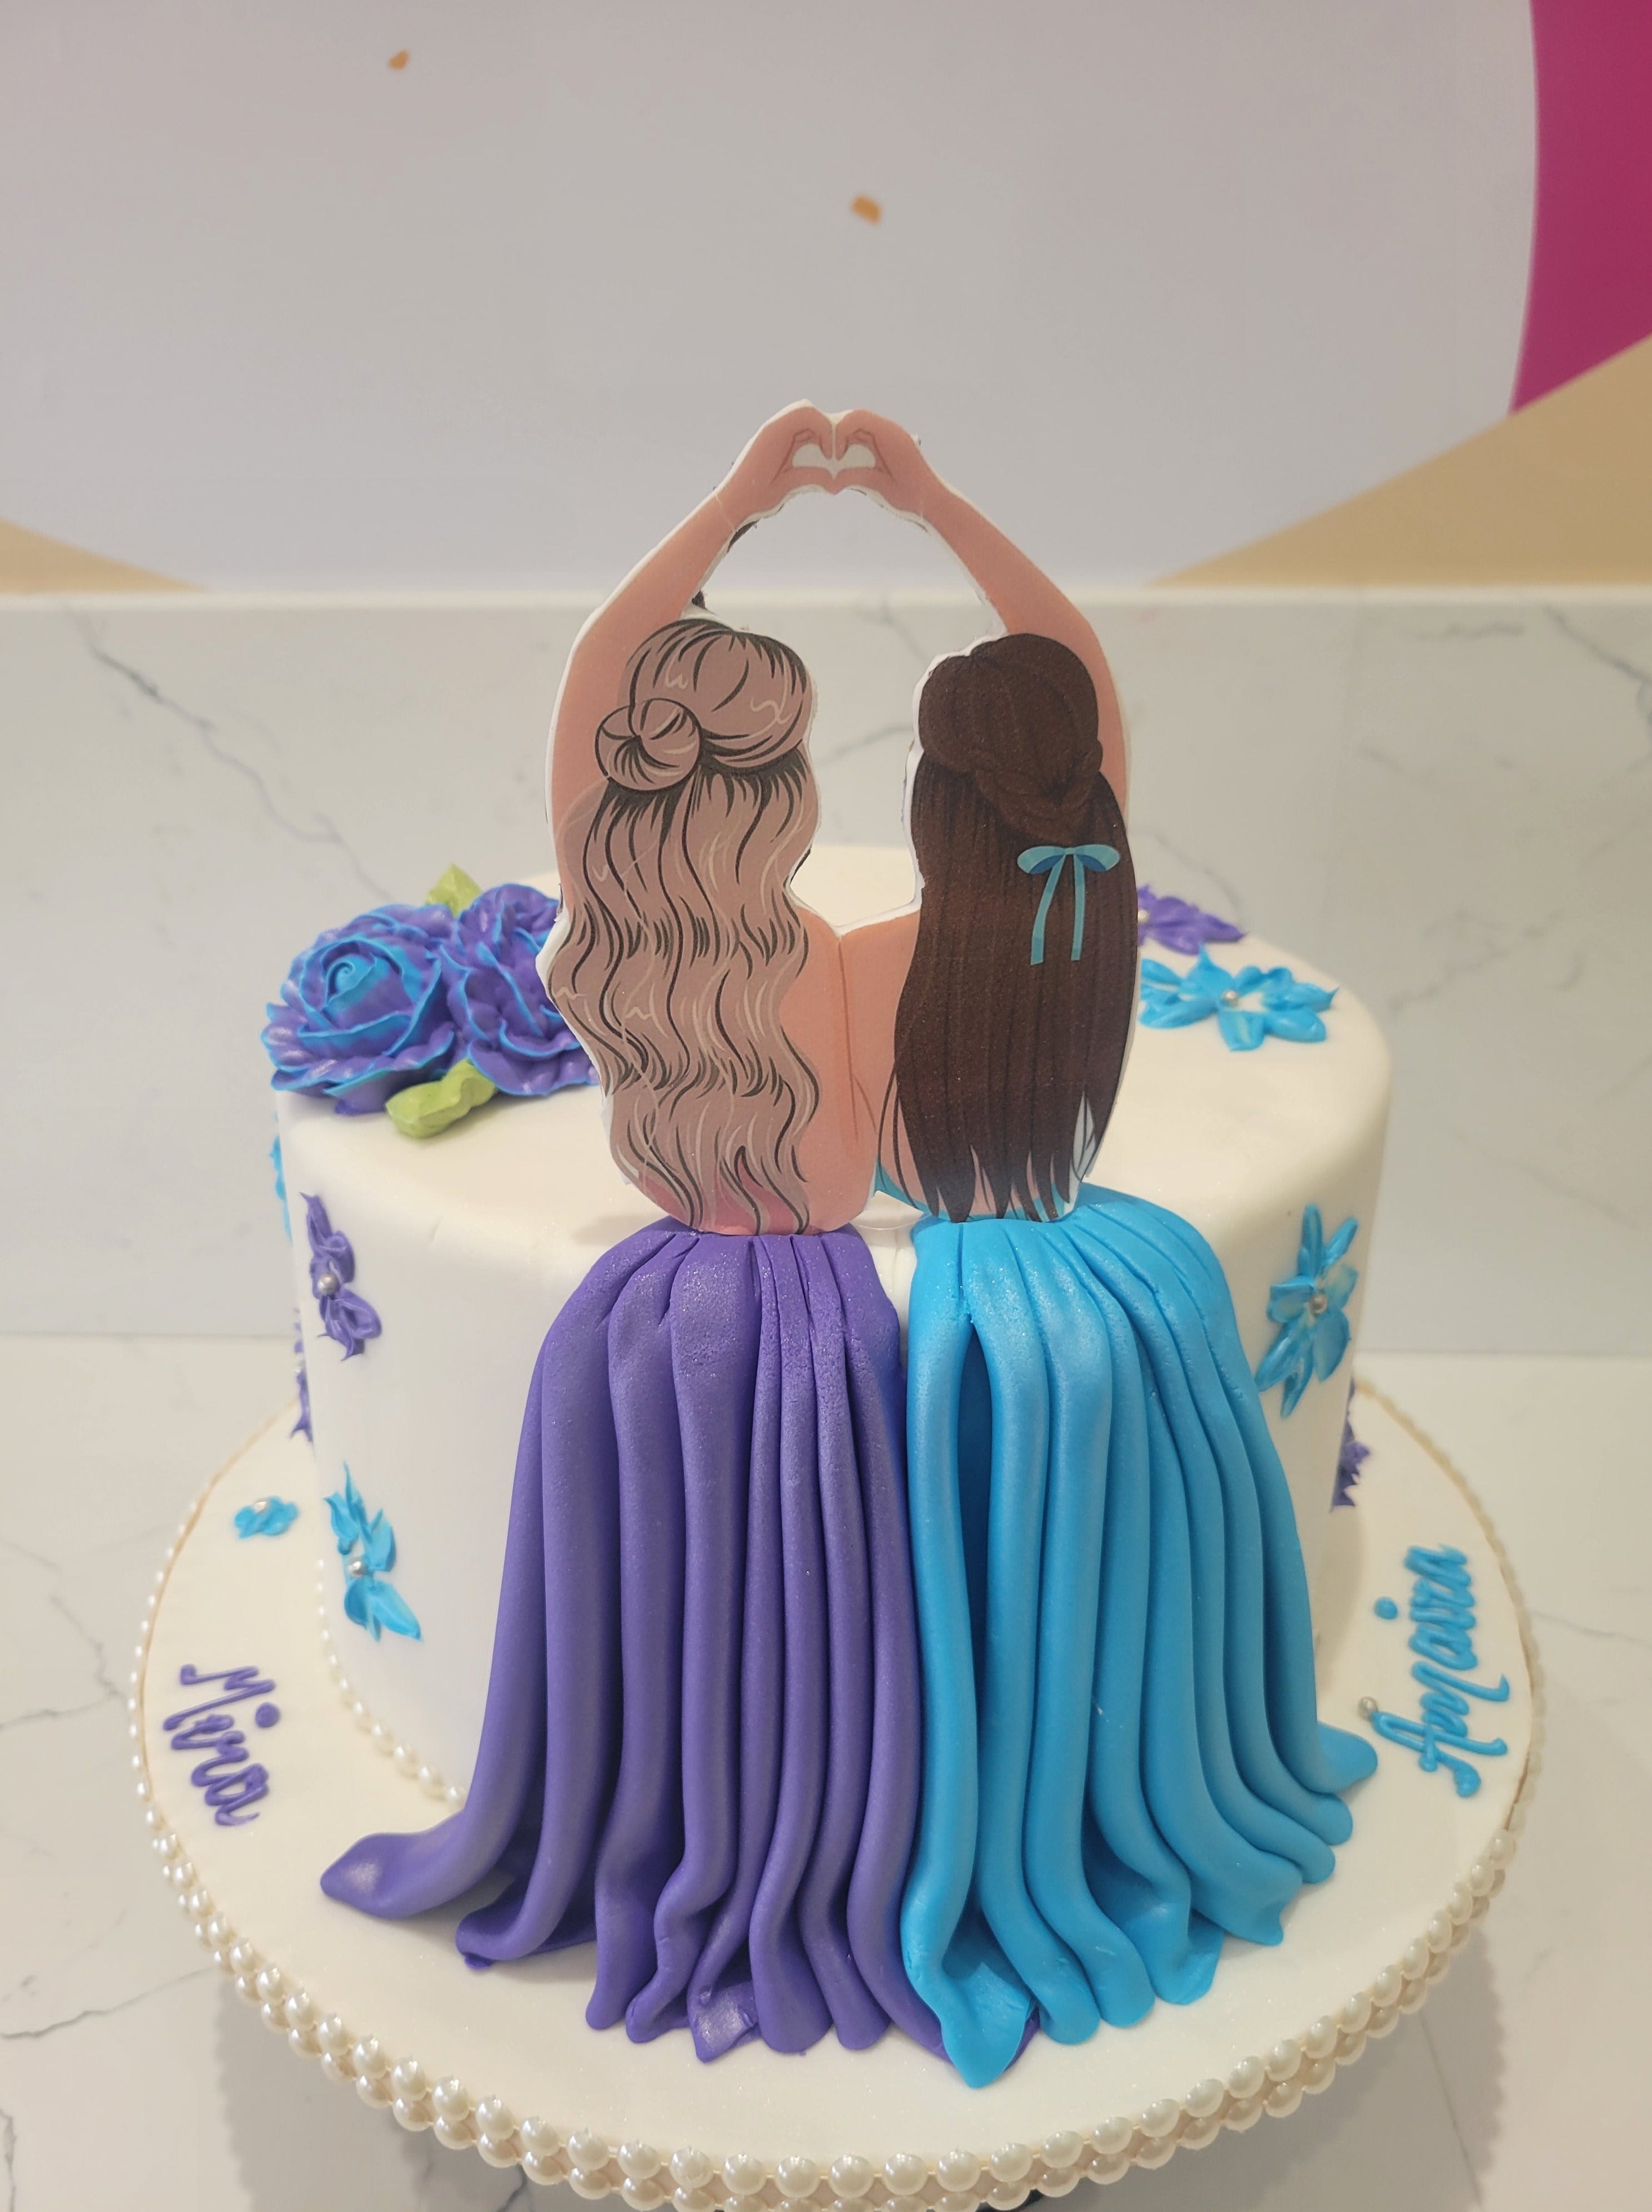 BFF Birthday Cake - Shoe Lovers | Helen C | Flickr